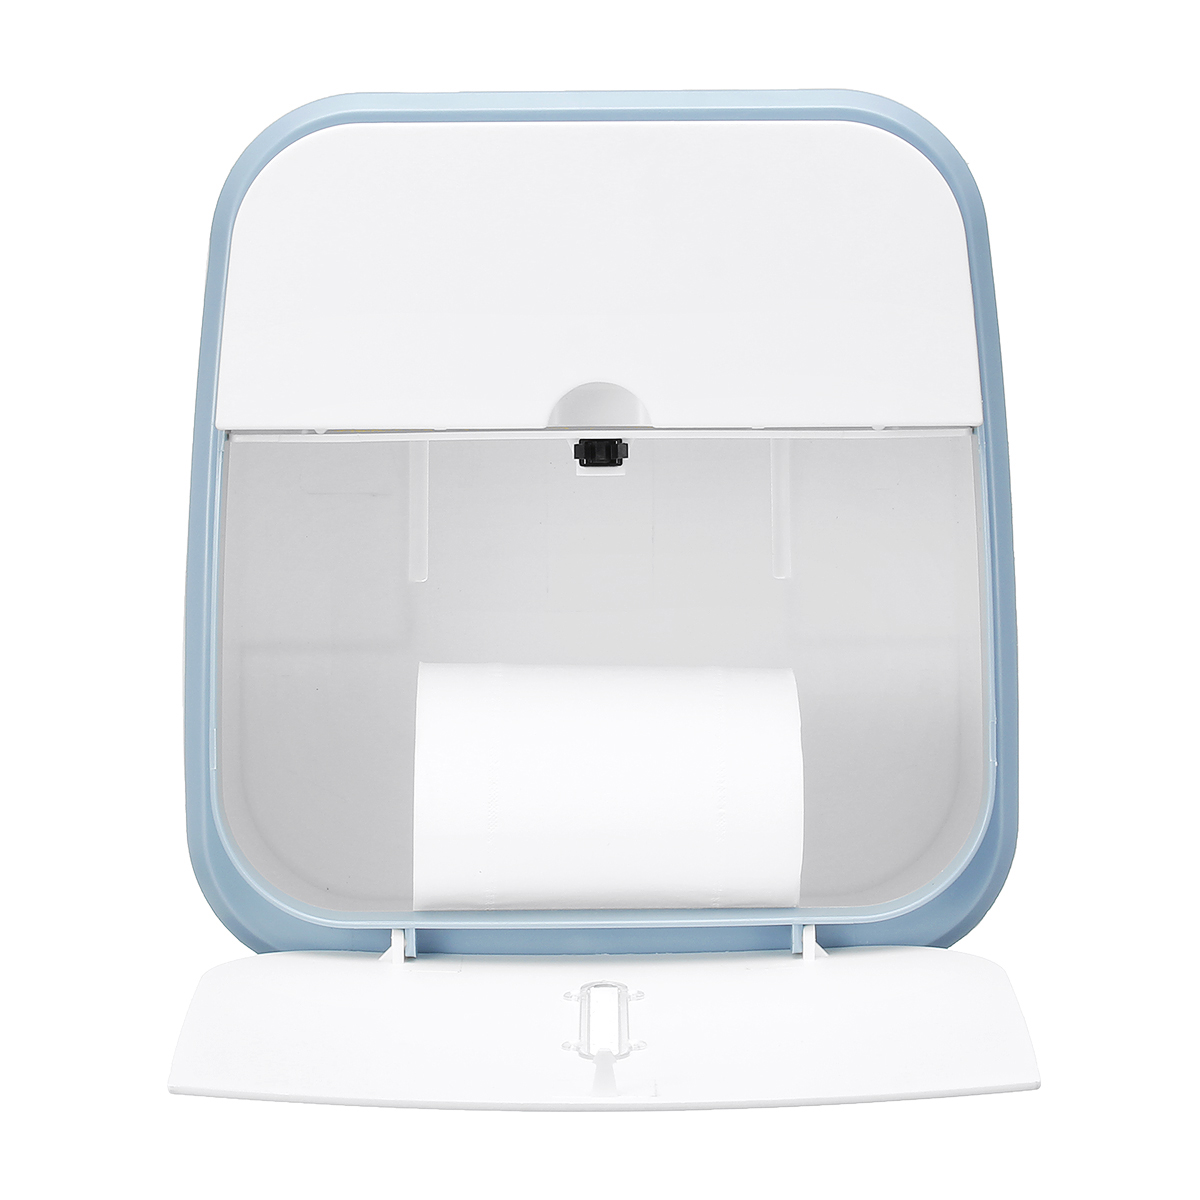 Toilet-Hand-Paper-Towel-Dispenser-Tissue-Box-Holder-Wall-Mounted-Bathroom-Kit-1591177-3